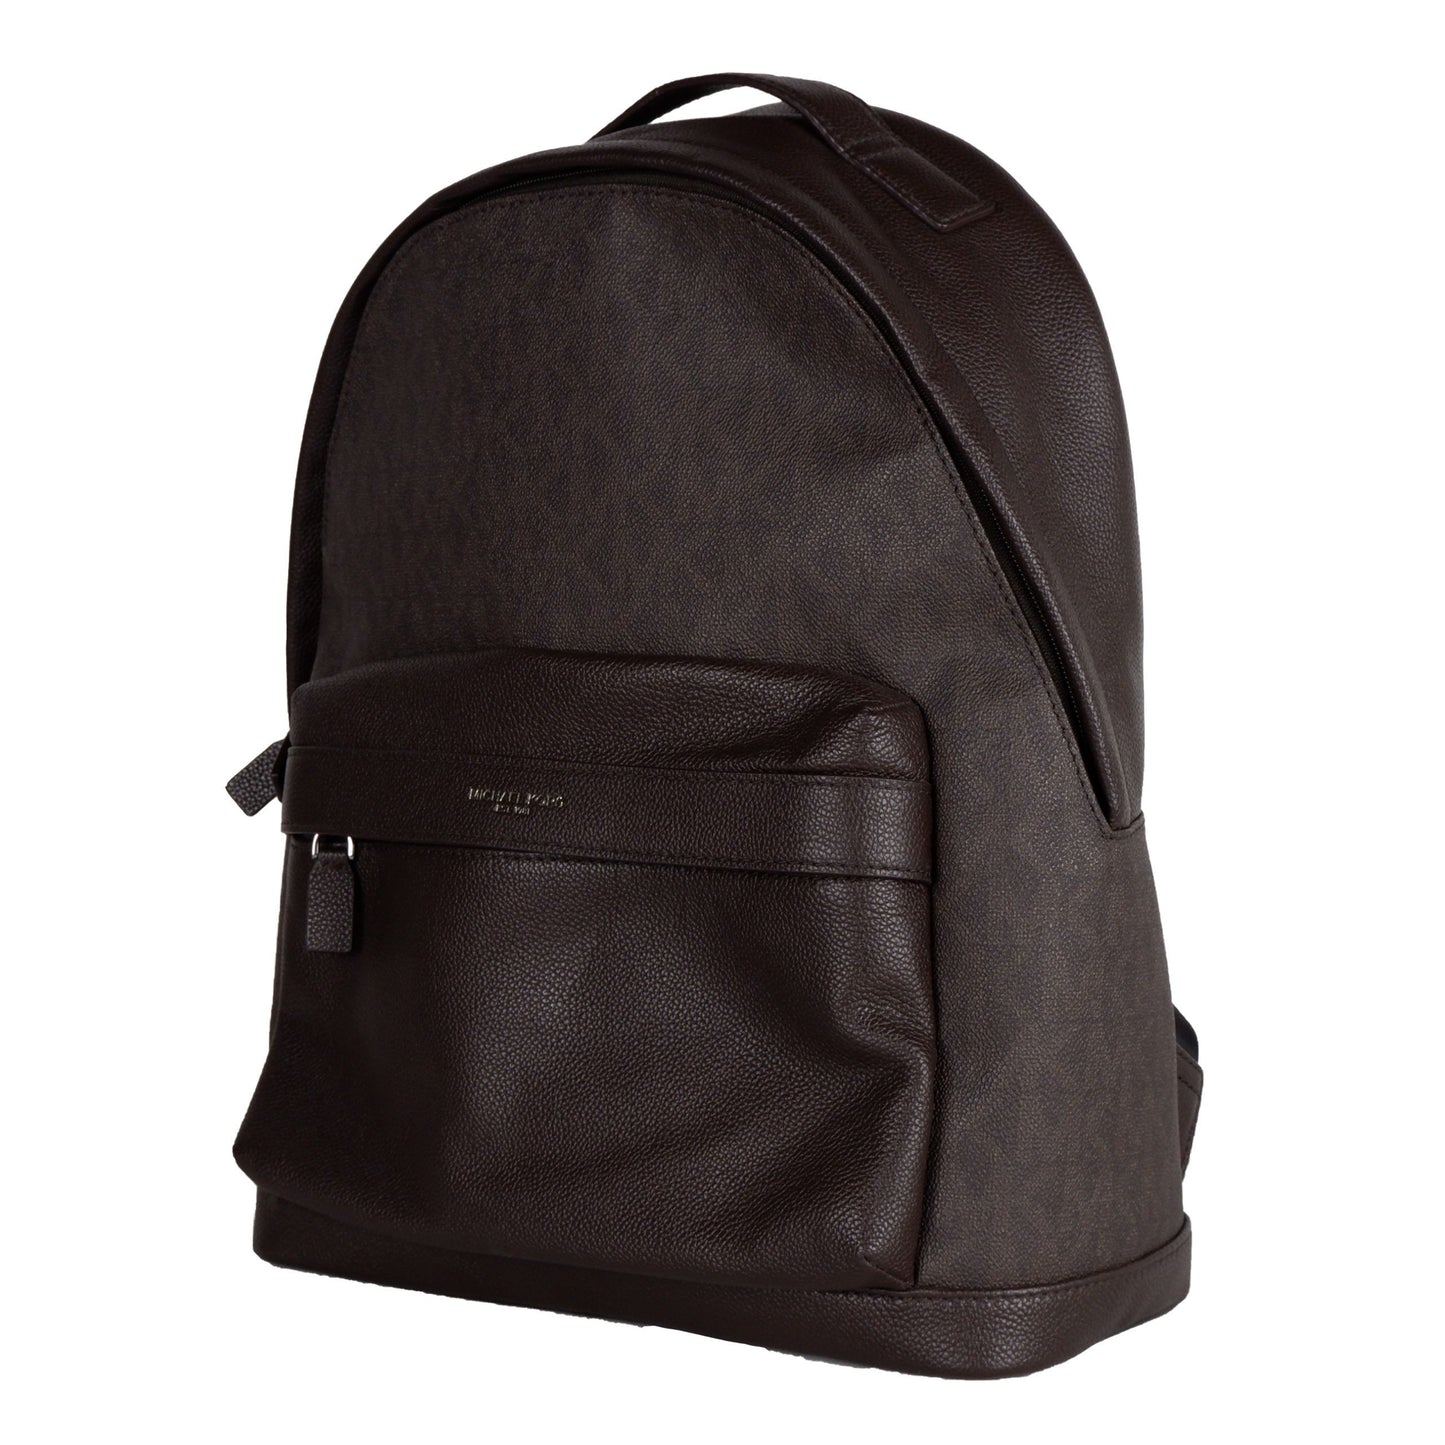 Elegant Brown Leather Backpack